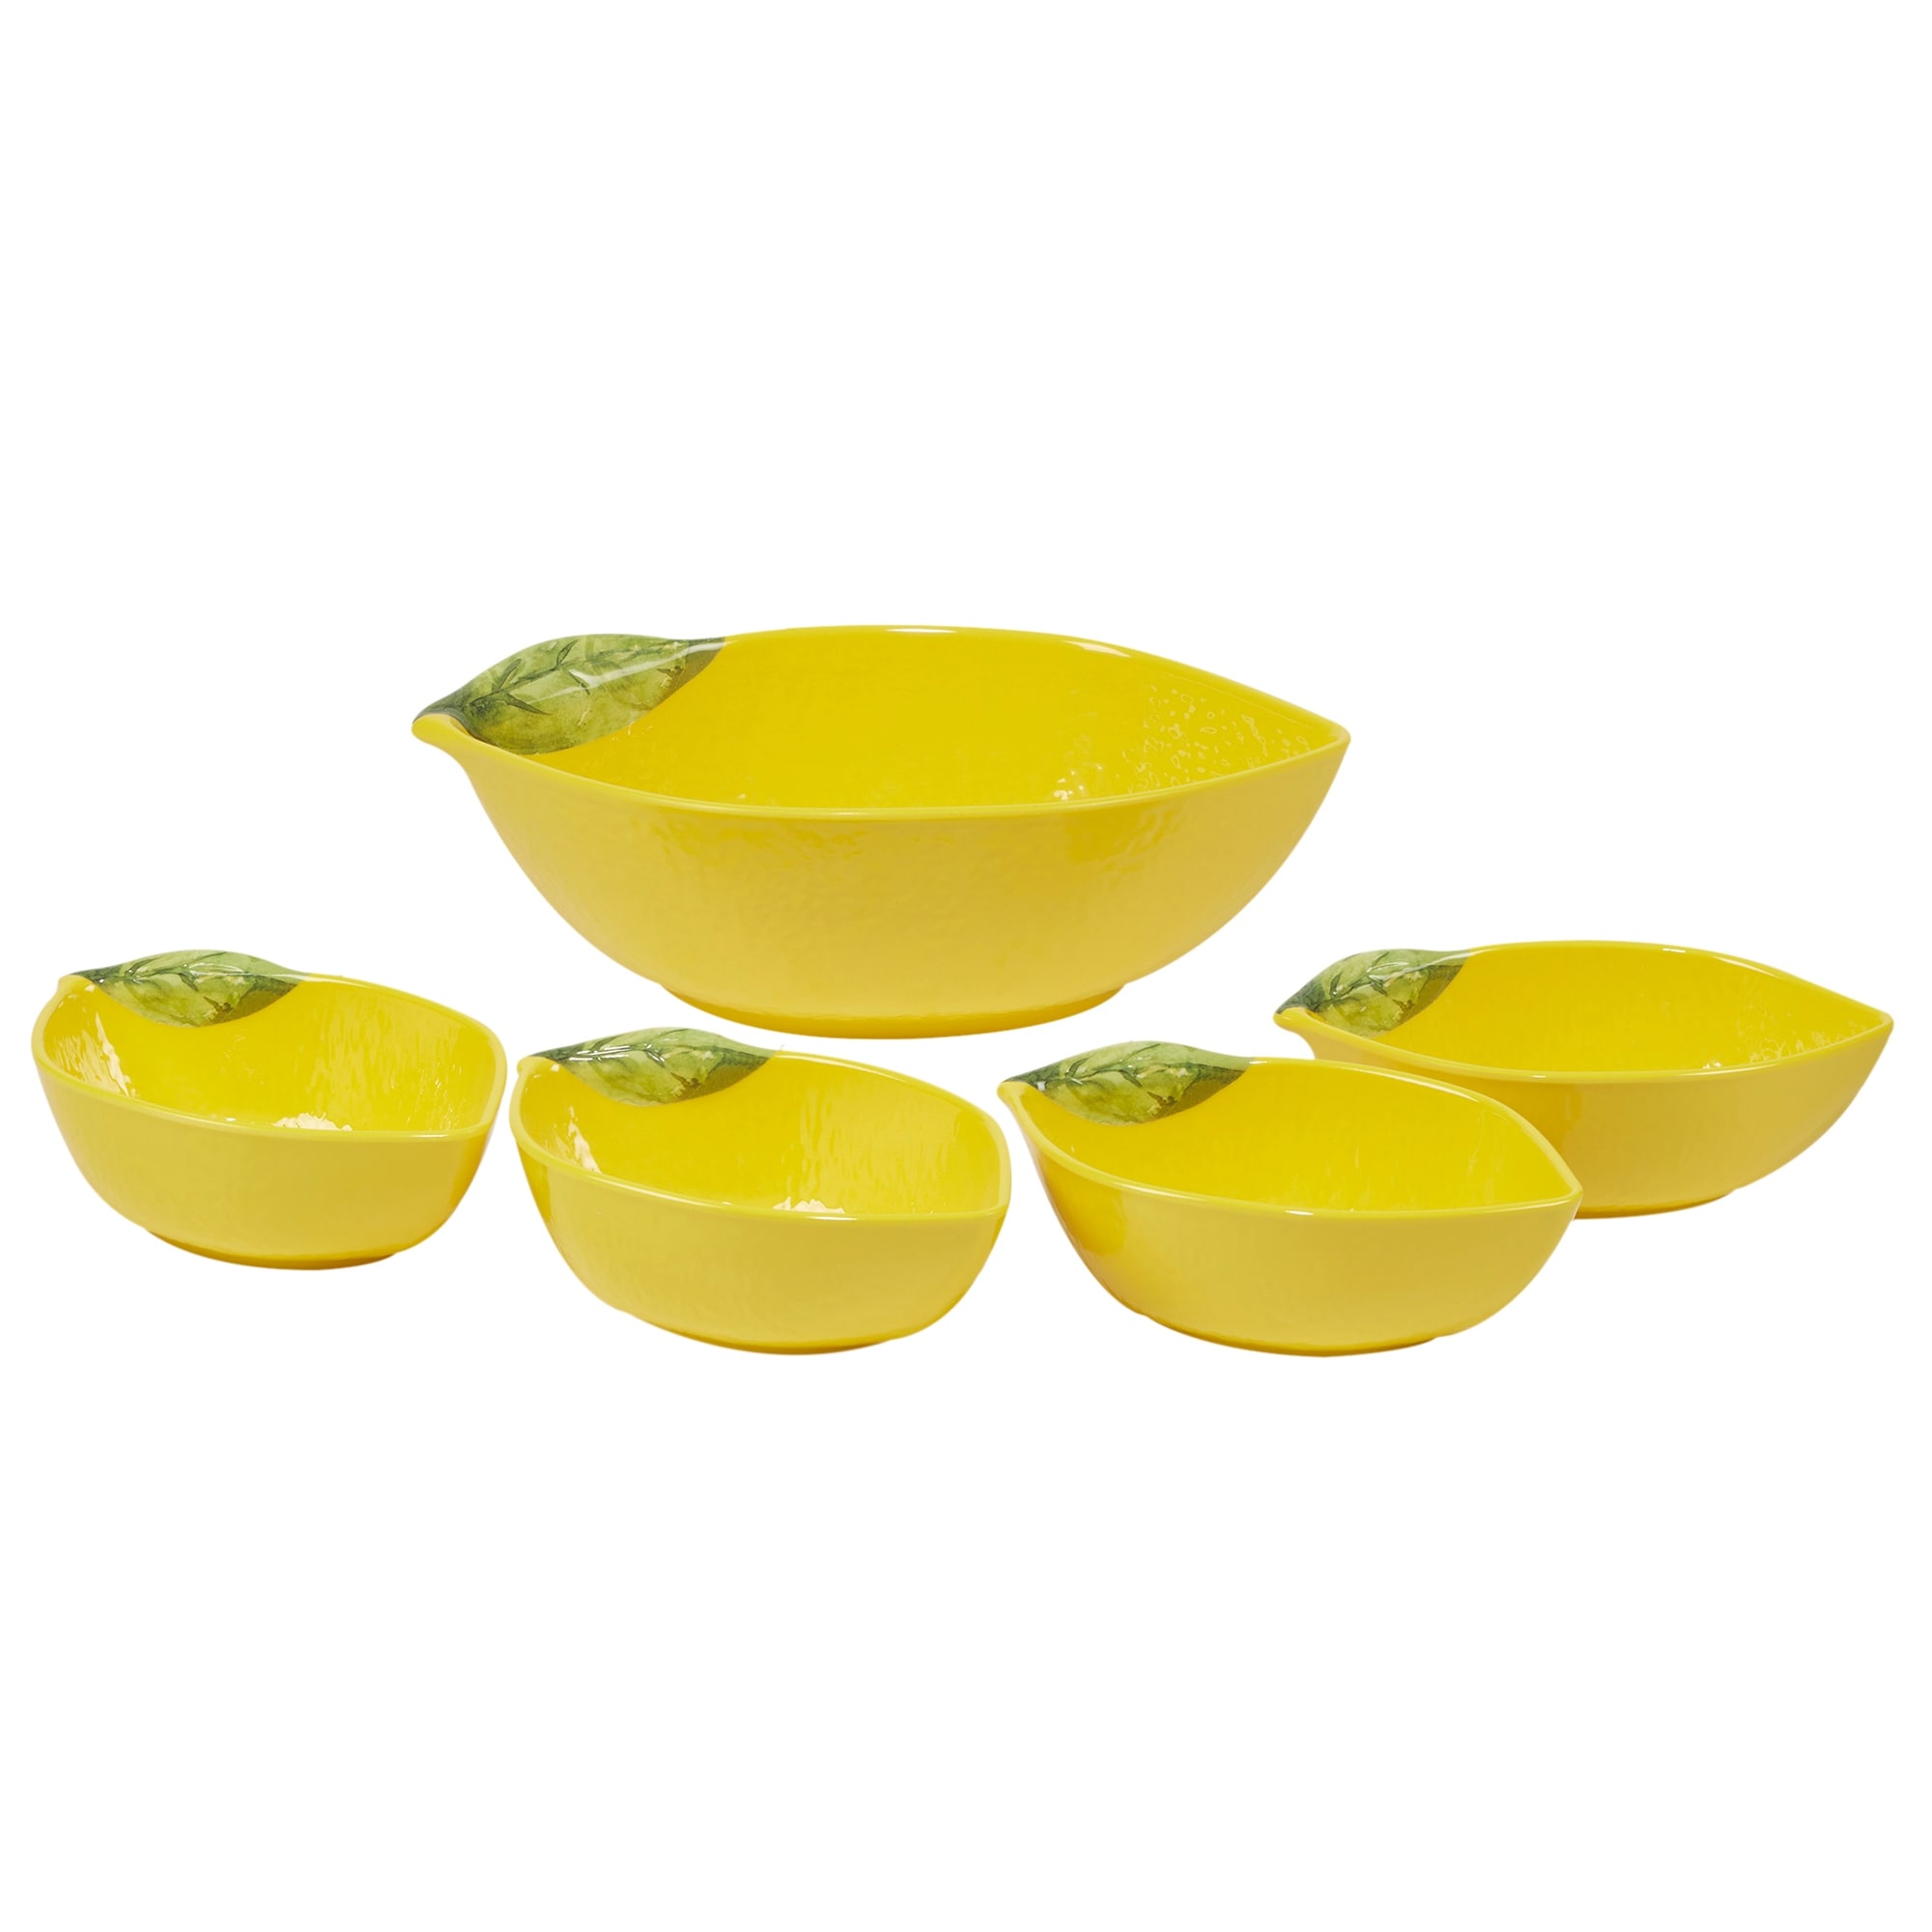 https://ak1.ostkcdn.com/images/products/is/images/direct/3247a5aab7c72b70d039261a480f62af1f5de04d/Certified-International-3-D-Lemon-5-piece-Melamine-Serving-Bowl-Set.jpg